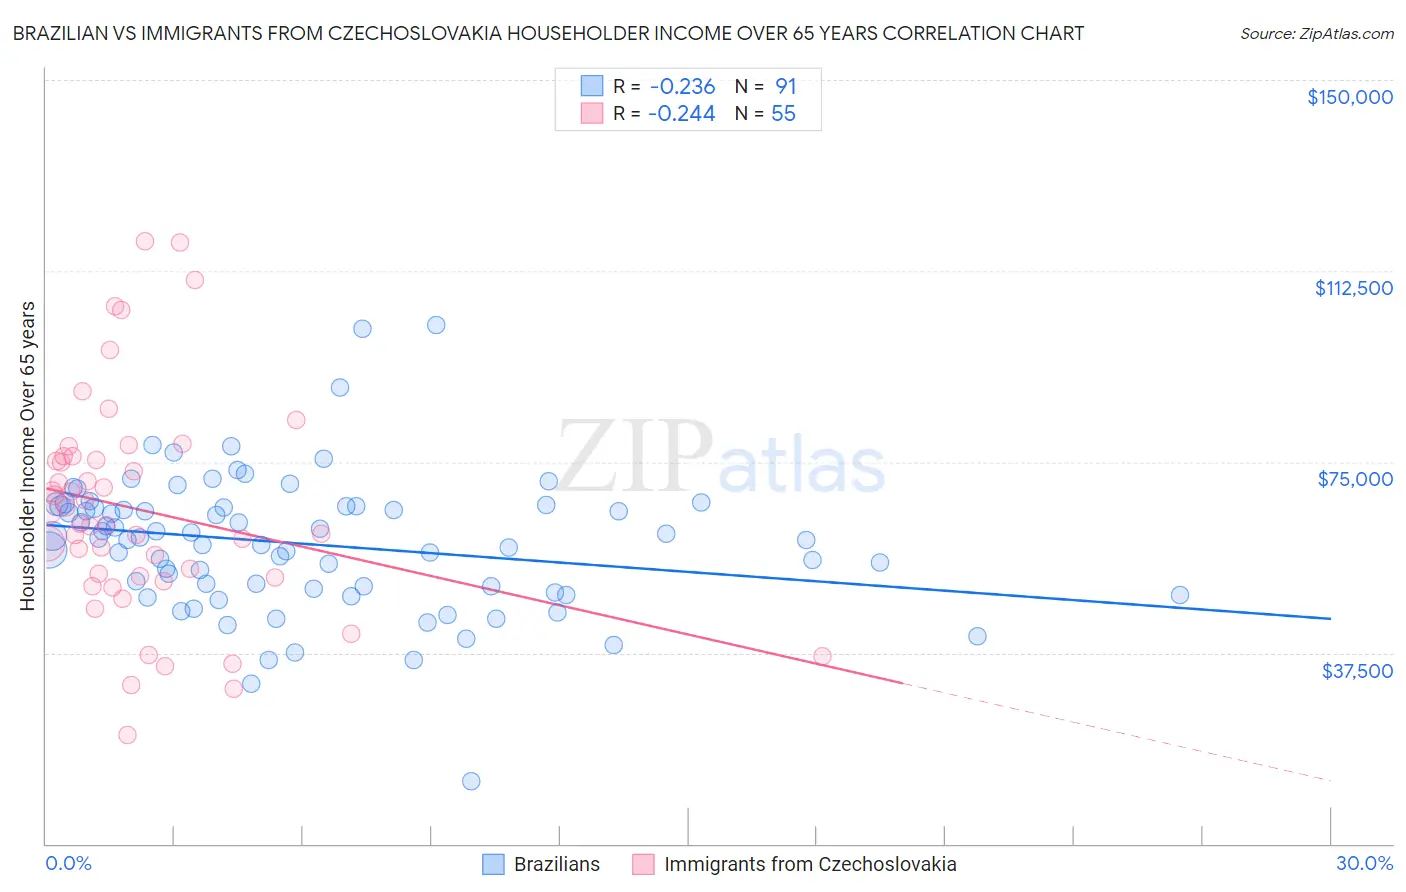 Brazilian vs Immigrants from Czechoslovakia Householder Income Over 65 years